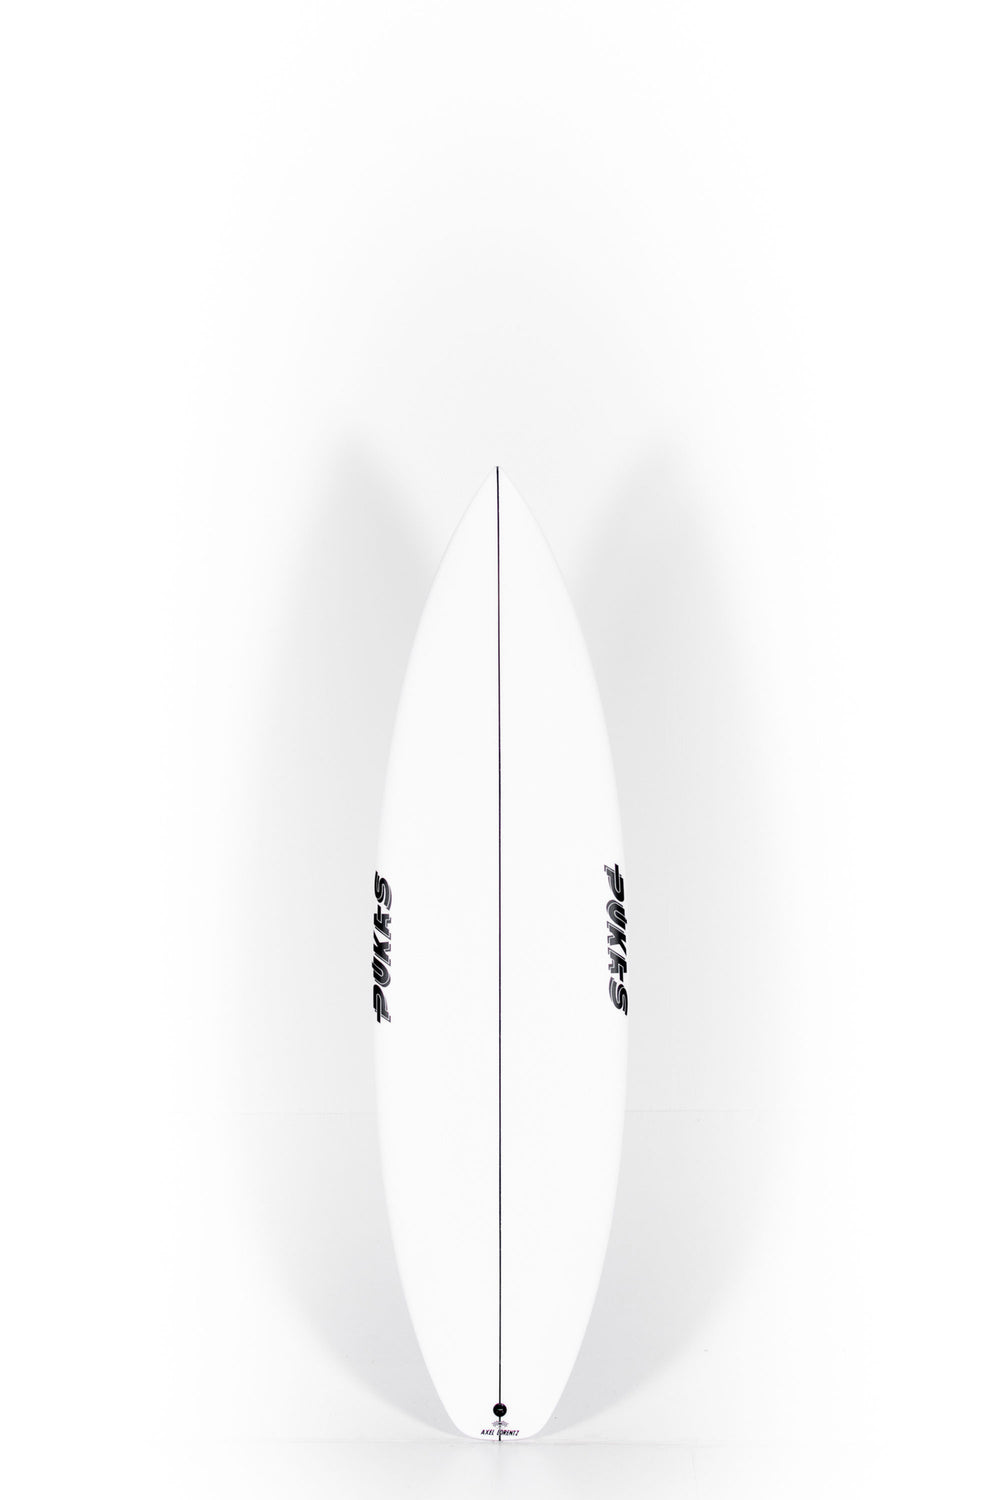 Pukas Surfboard - DARKER by Axel Lorentz - 6'2